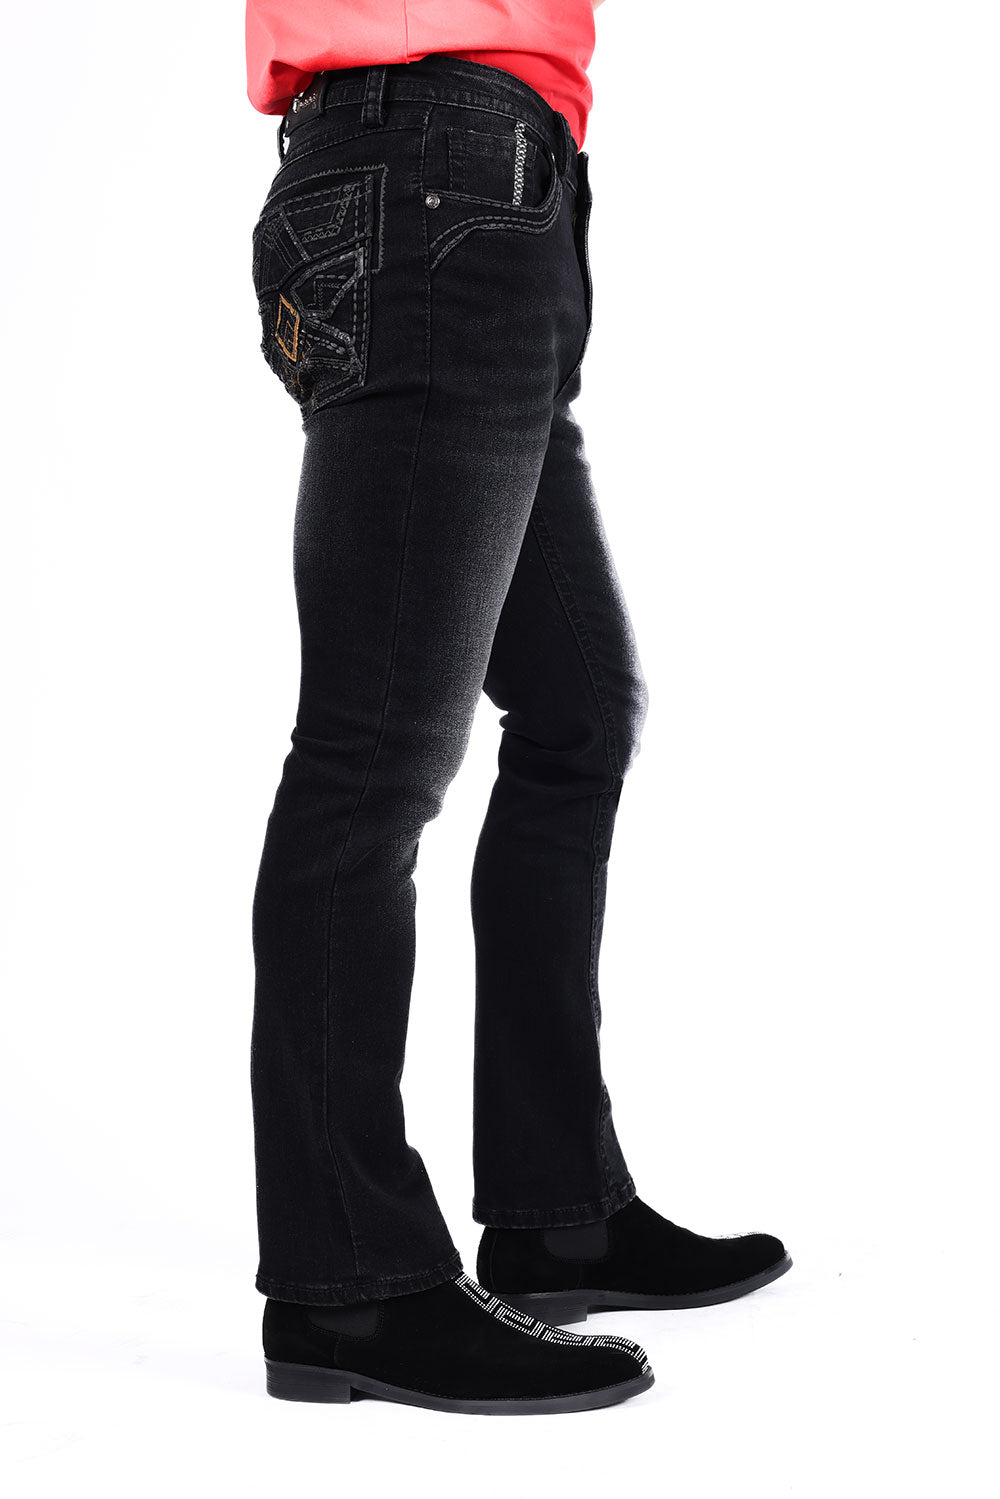 Barabas Men's Western Cowboy Bootcut Denim Distressed Jeans BWJ4001 Black